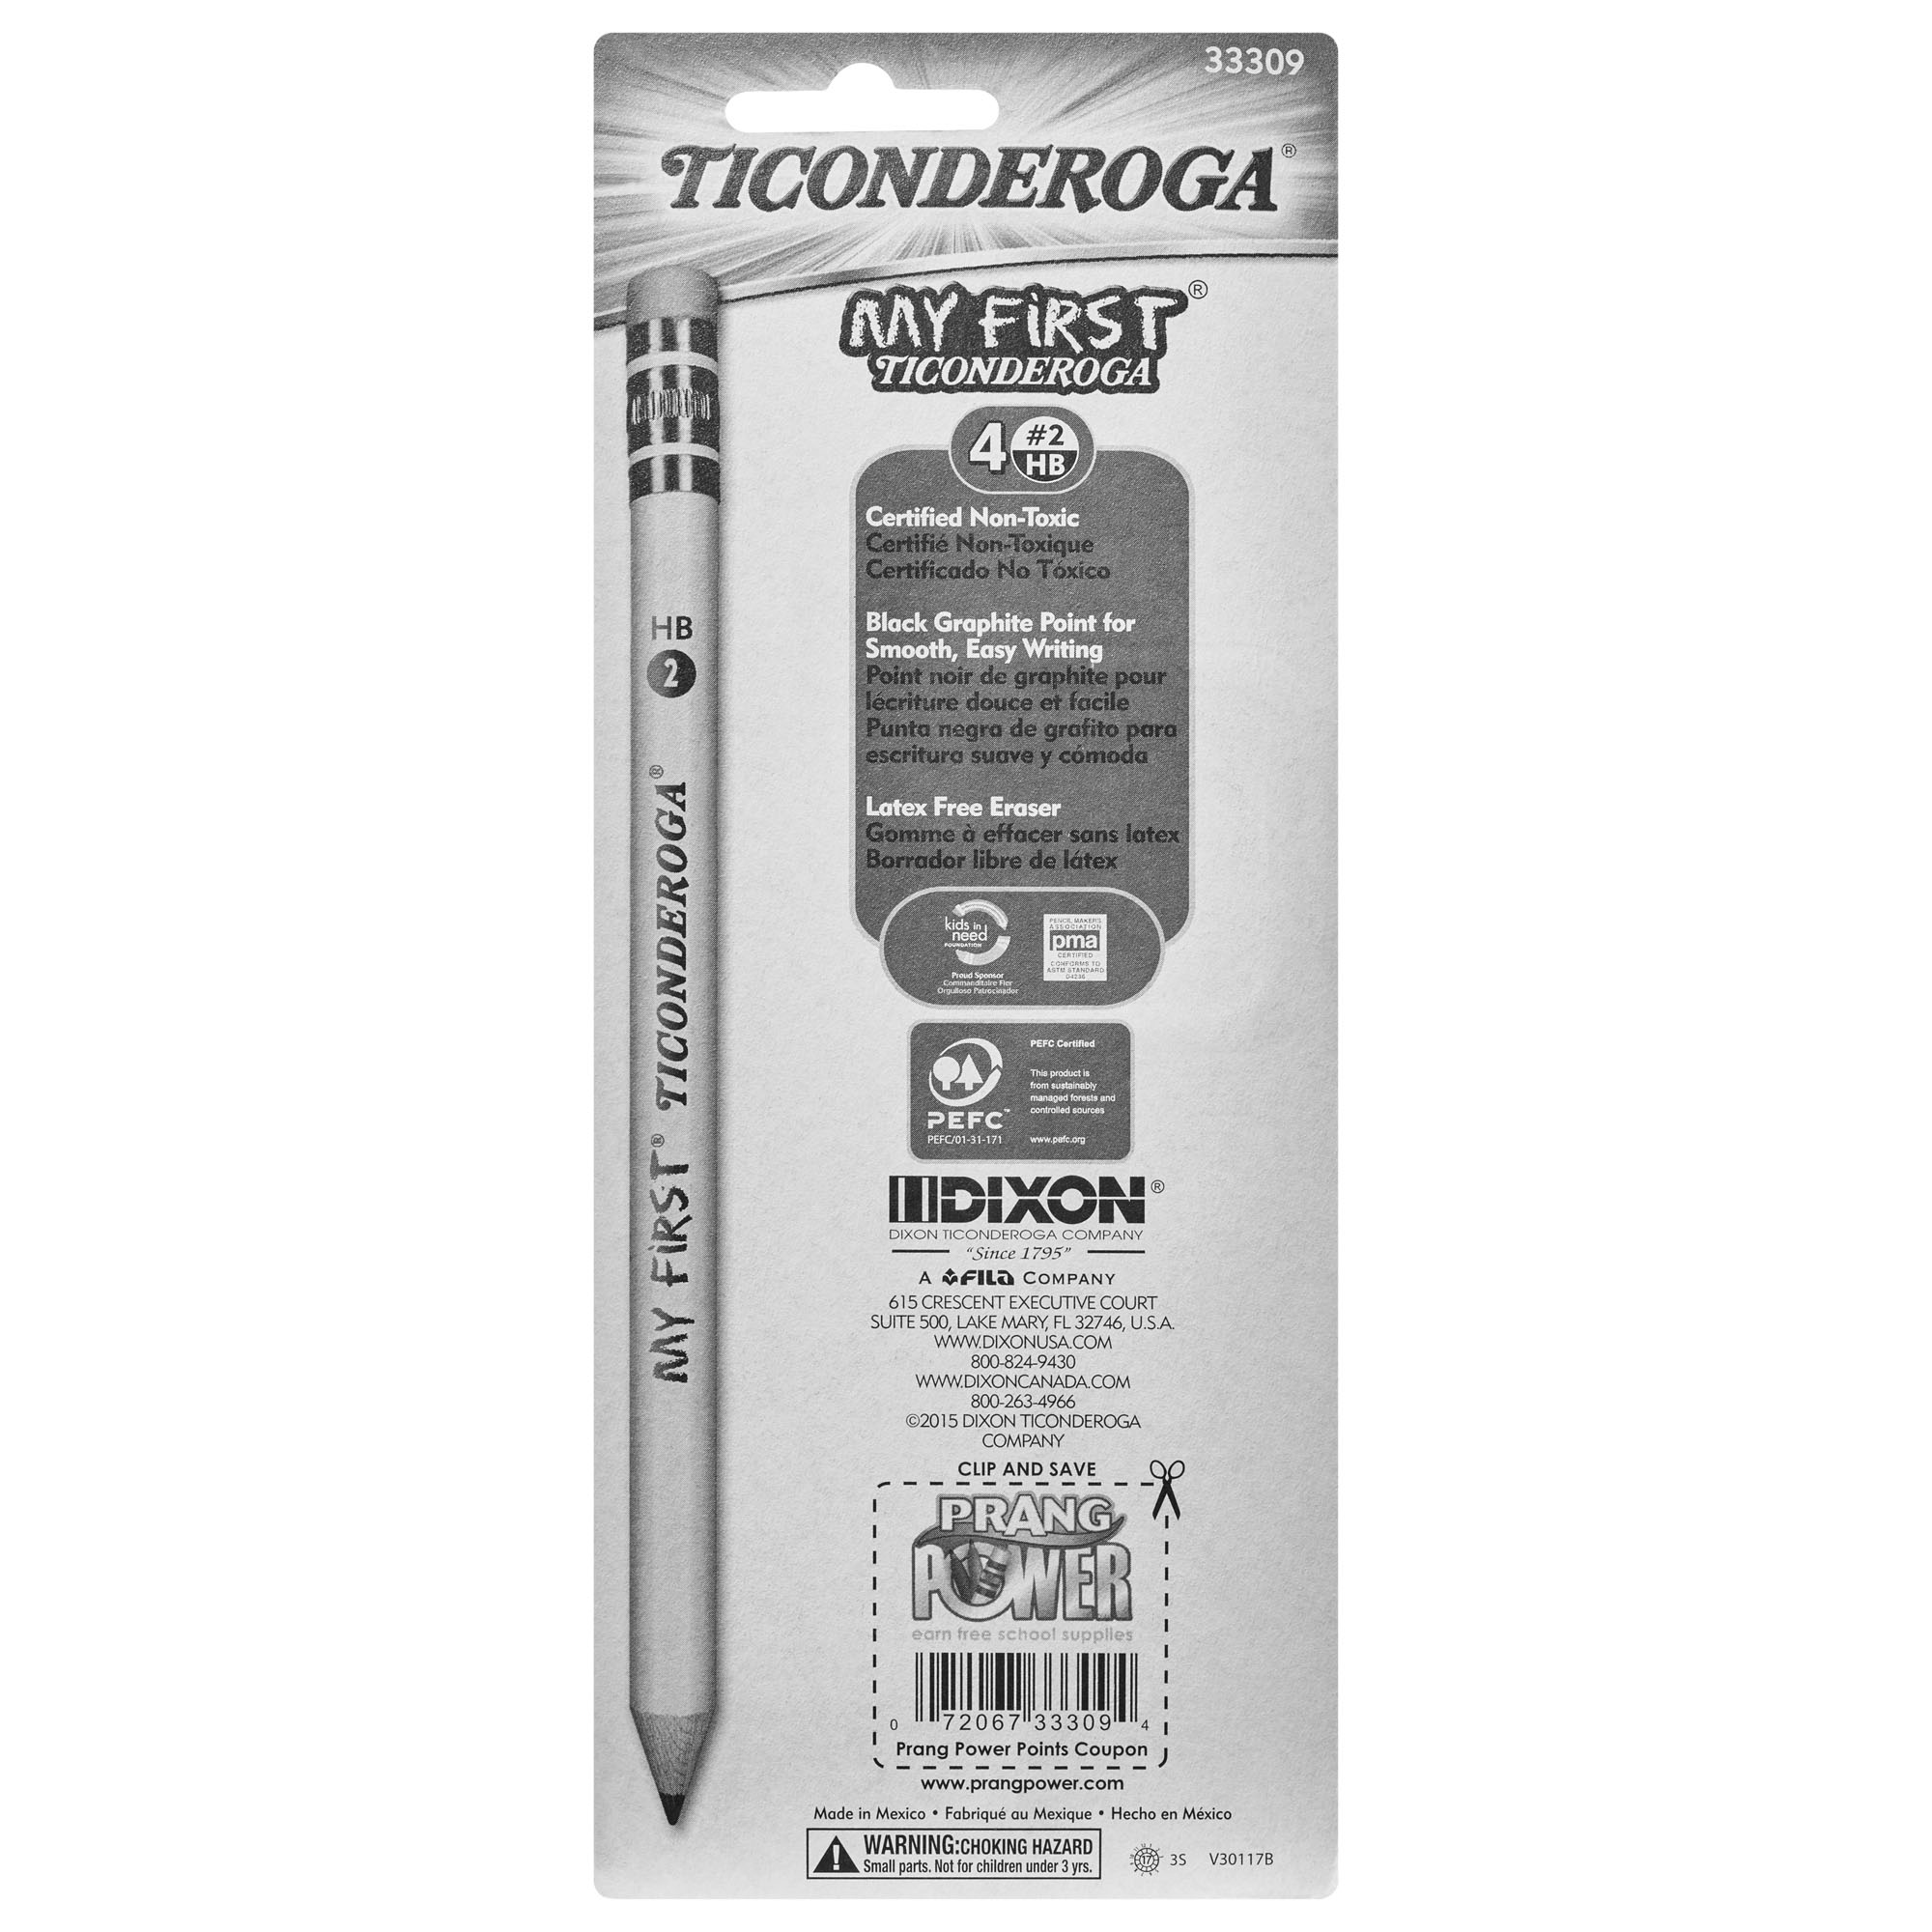 Rock the Test Pencil, Pre-sharpened (144 per unit), #P799 (C-39) –